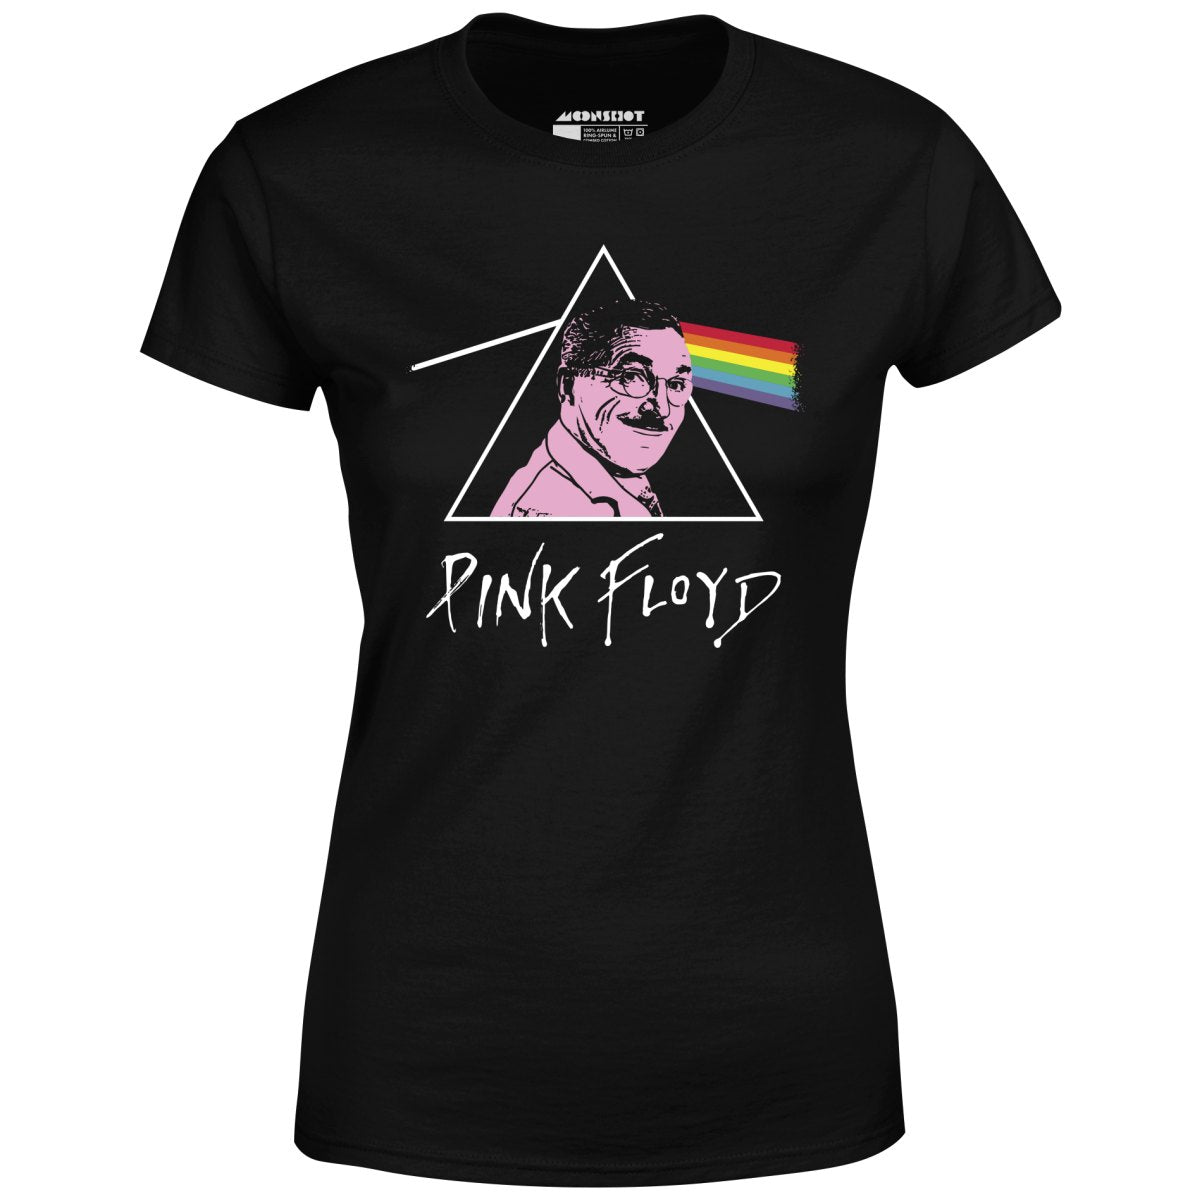 Pink Floyd the Barber - Women's T-Shirt